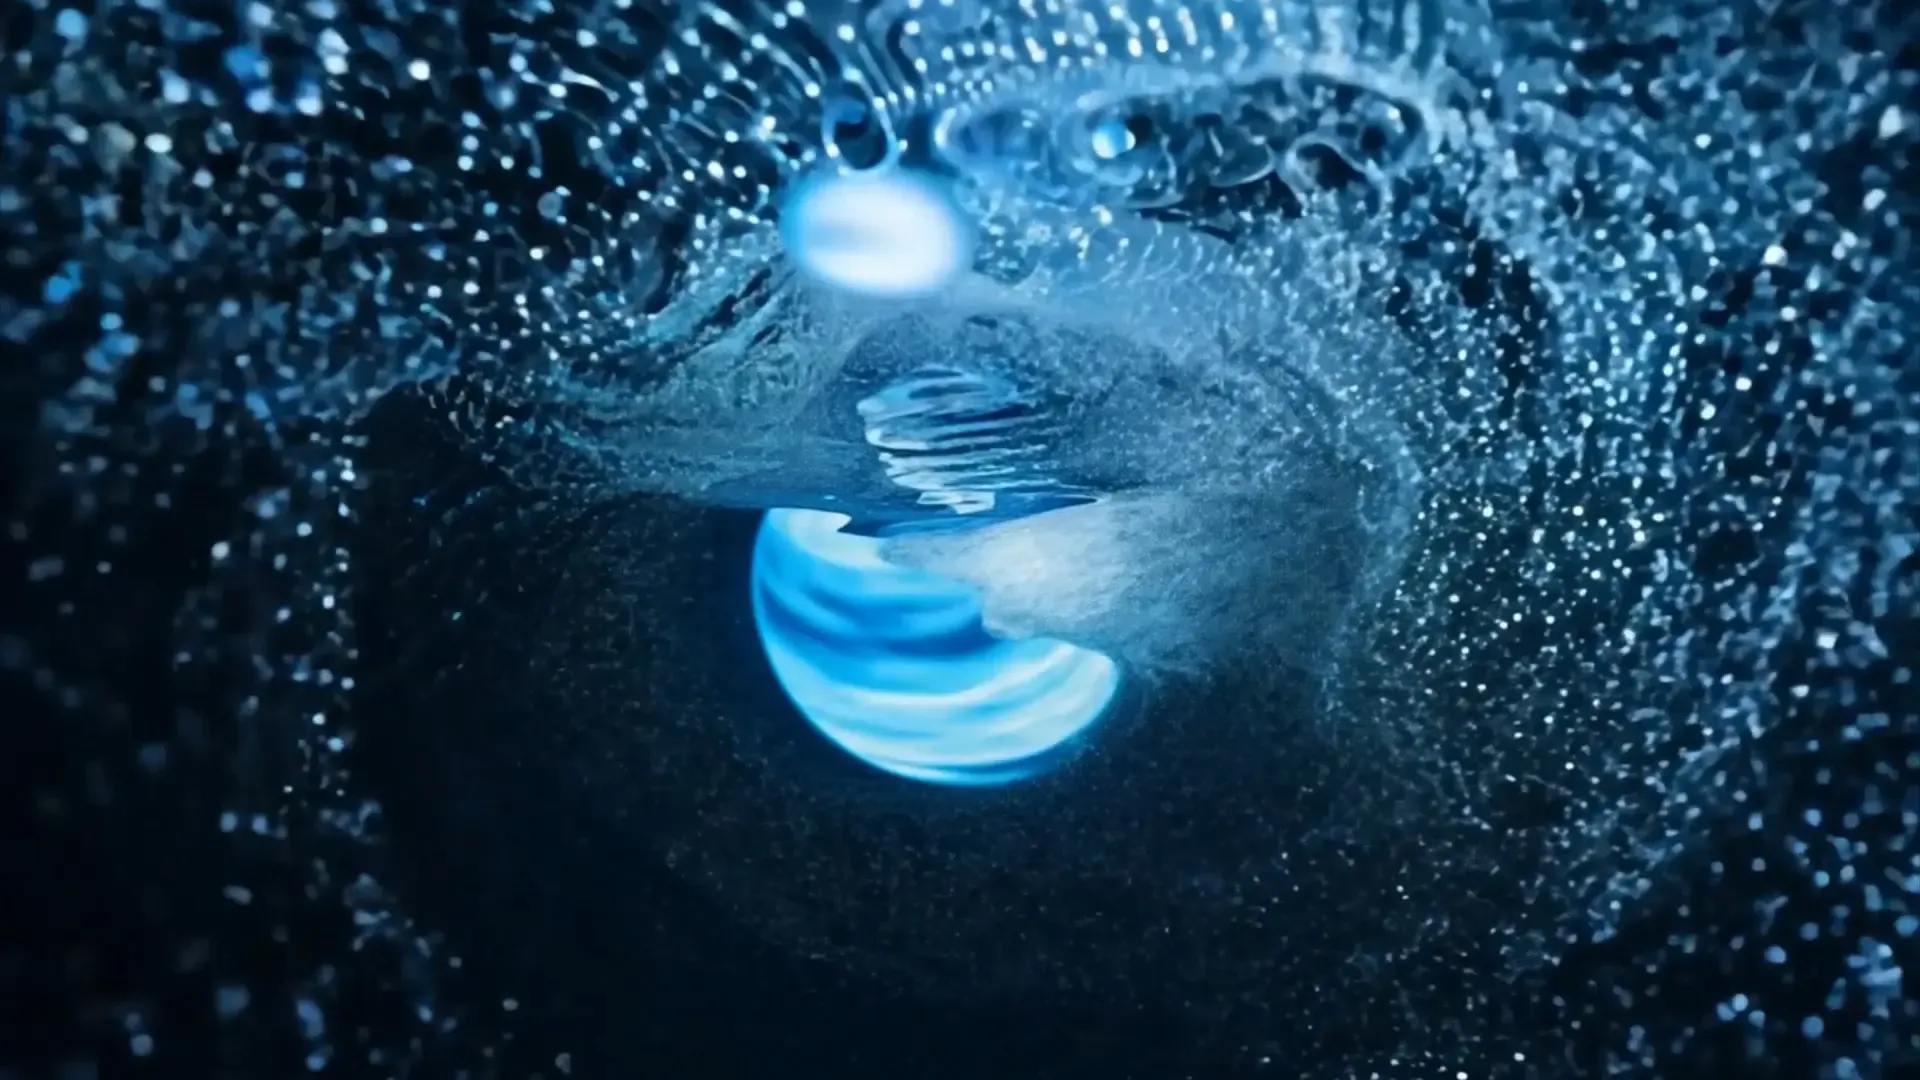 Aquatic Vortex Background Underwater Effect for Titles Animation